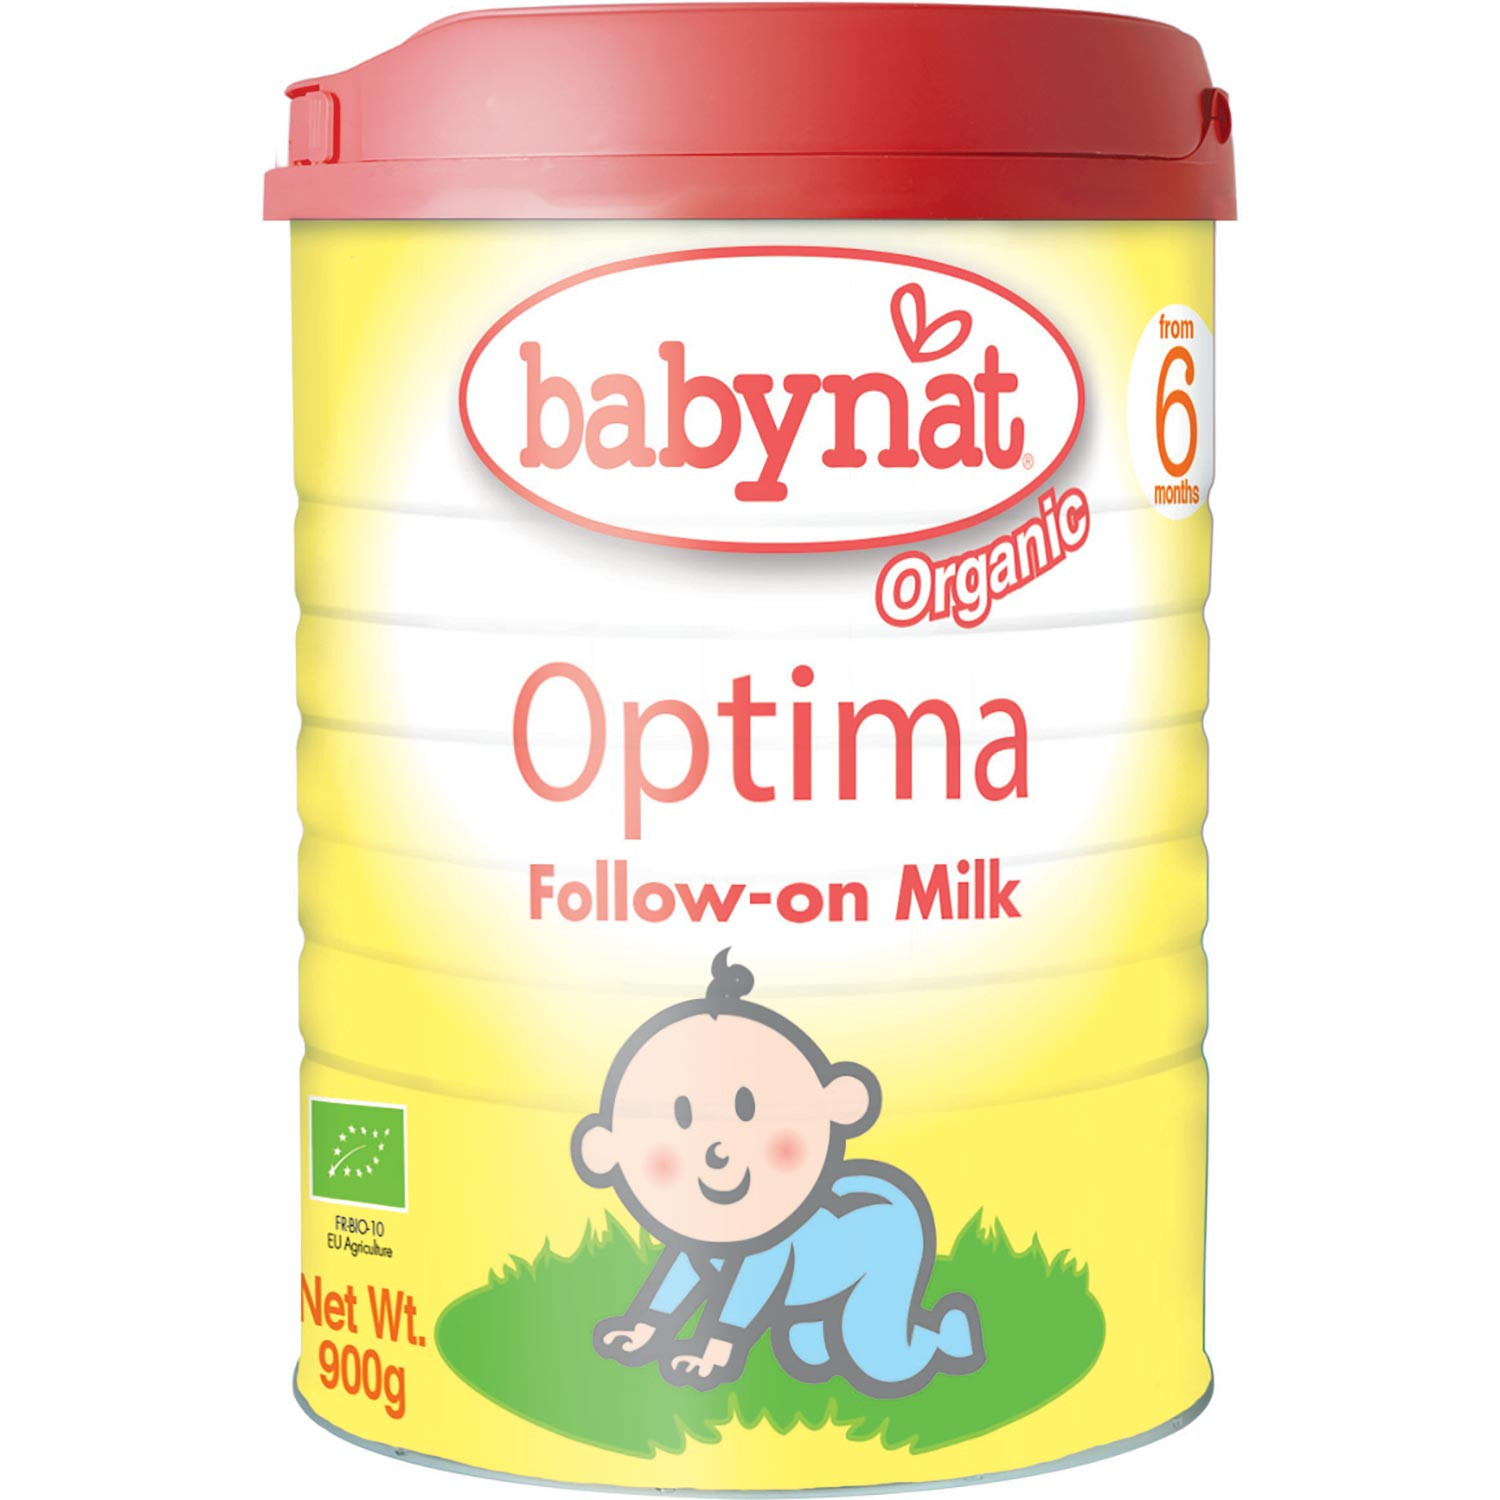 Babynat Organic Optima Follow-On Milk (6 mos. onwards), 900 g